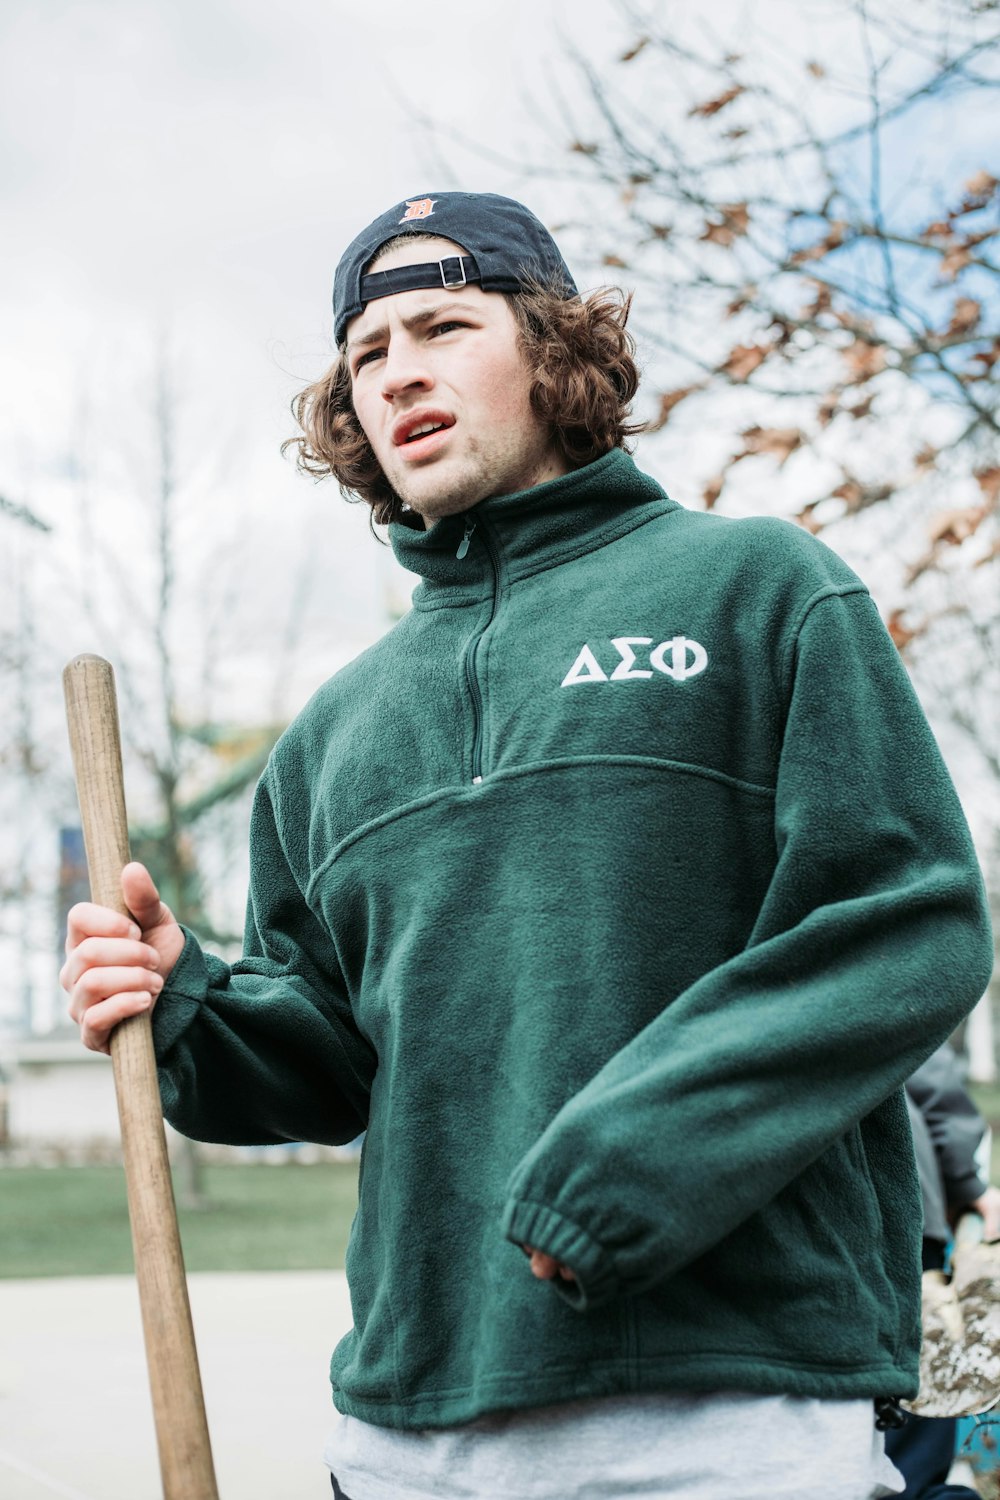 a man in a green jacket holding a baseball bat